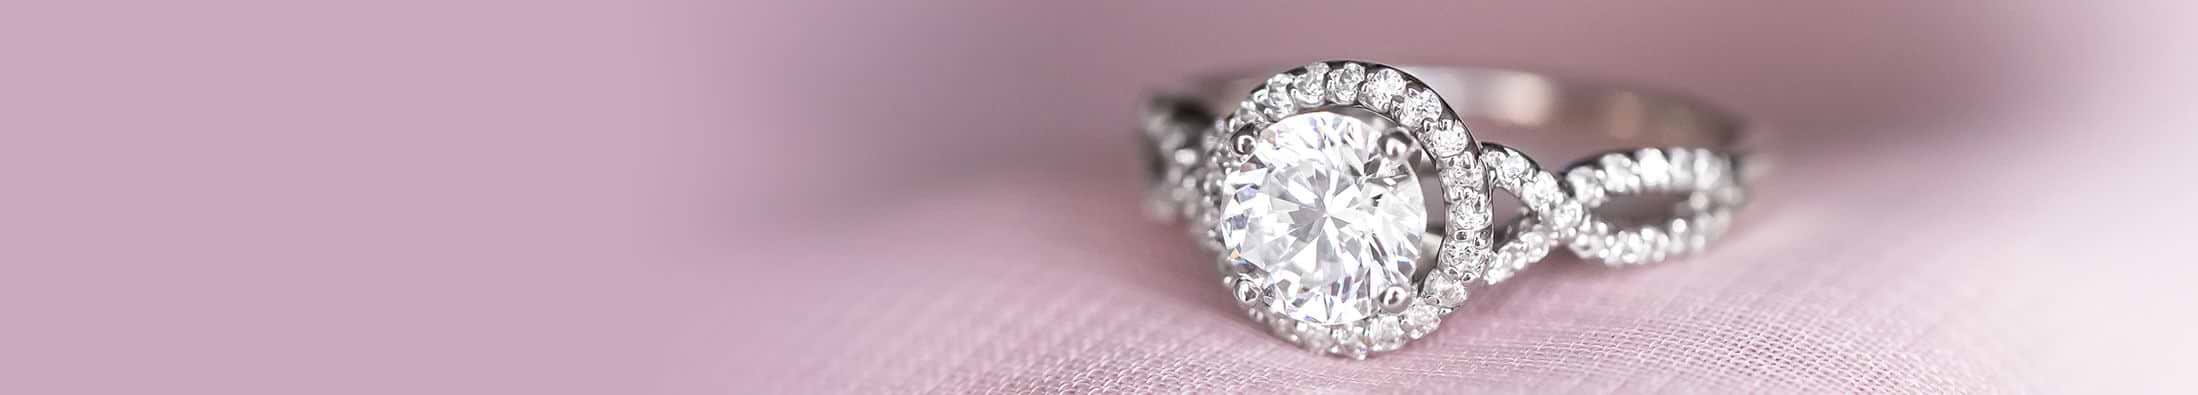 Top Twenty Most Popular Engagement Rings